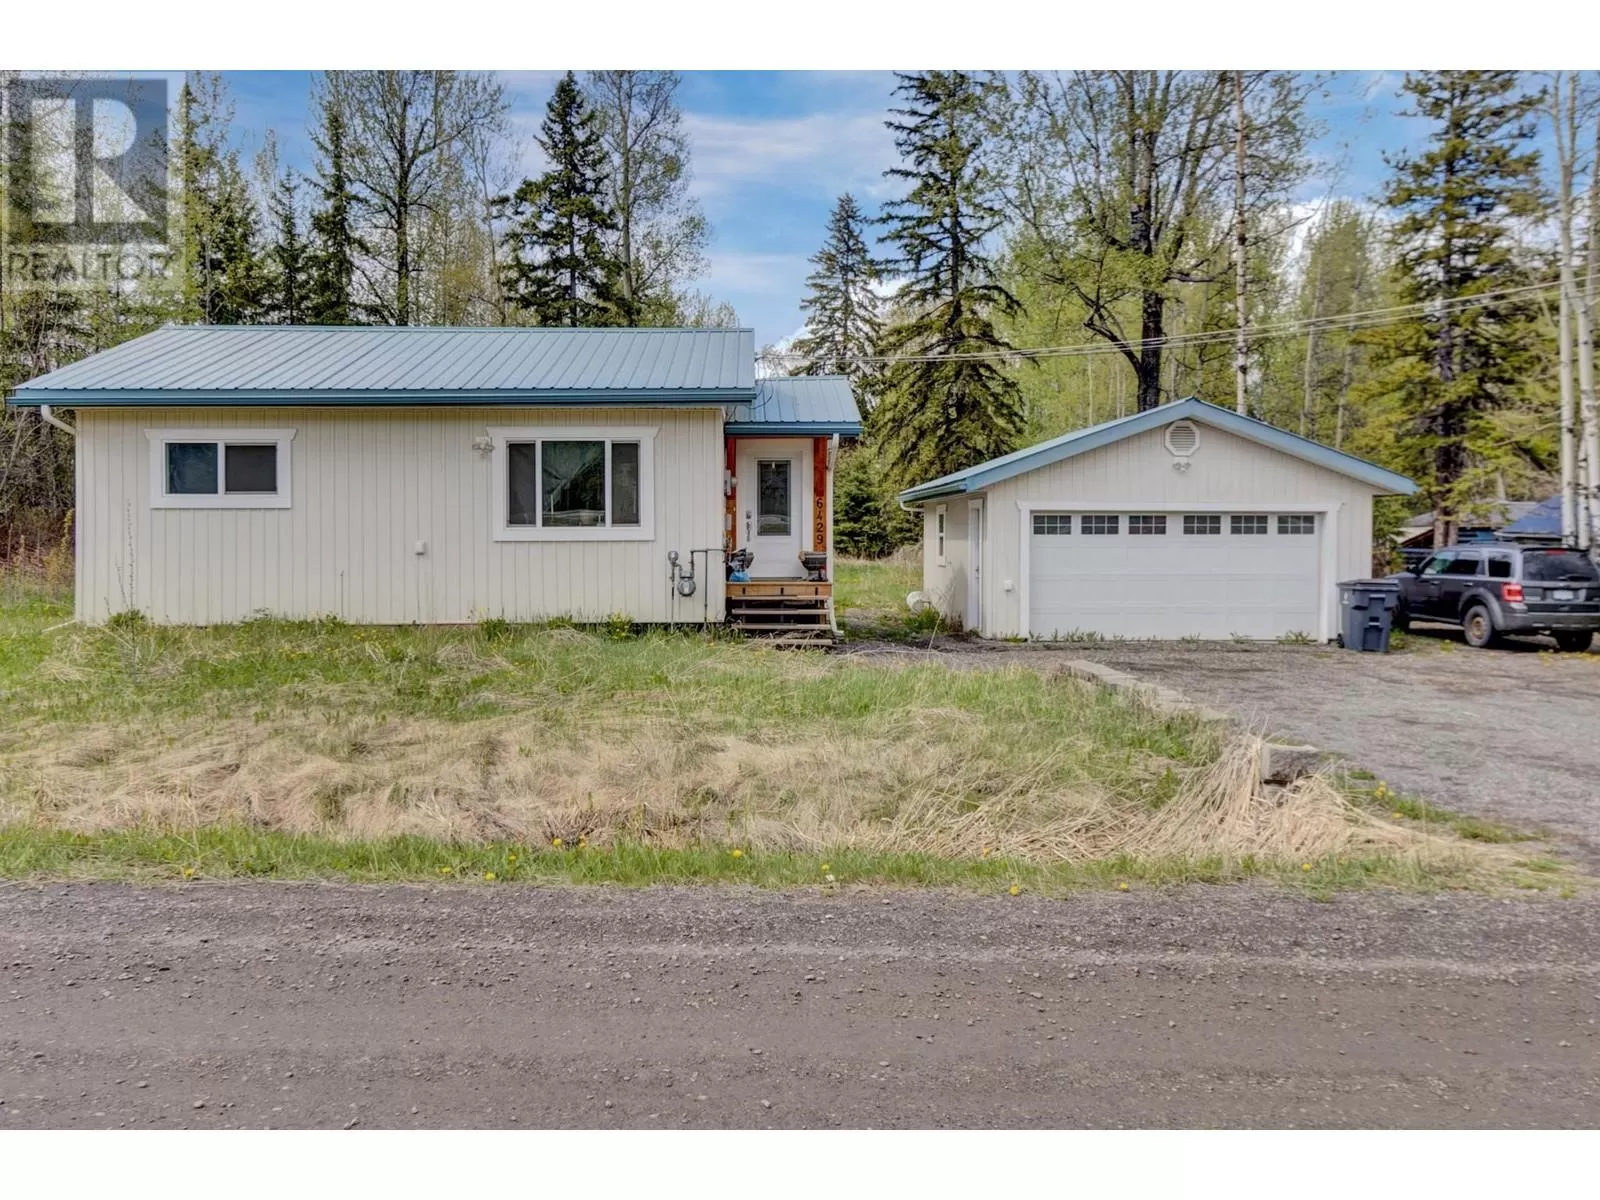 House for rent: 6429 W Highway 16, Prince George, British Columbia V2N 6N6